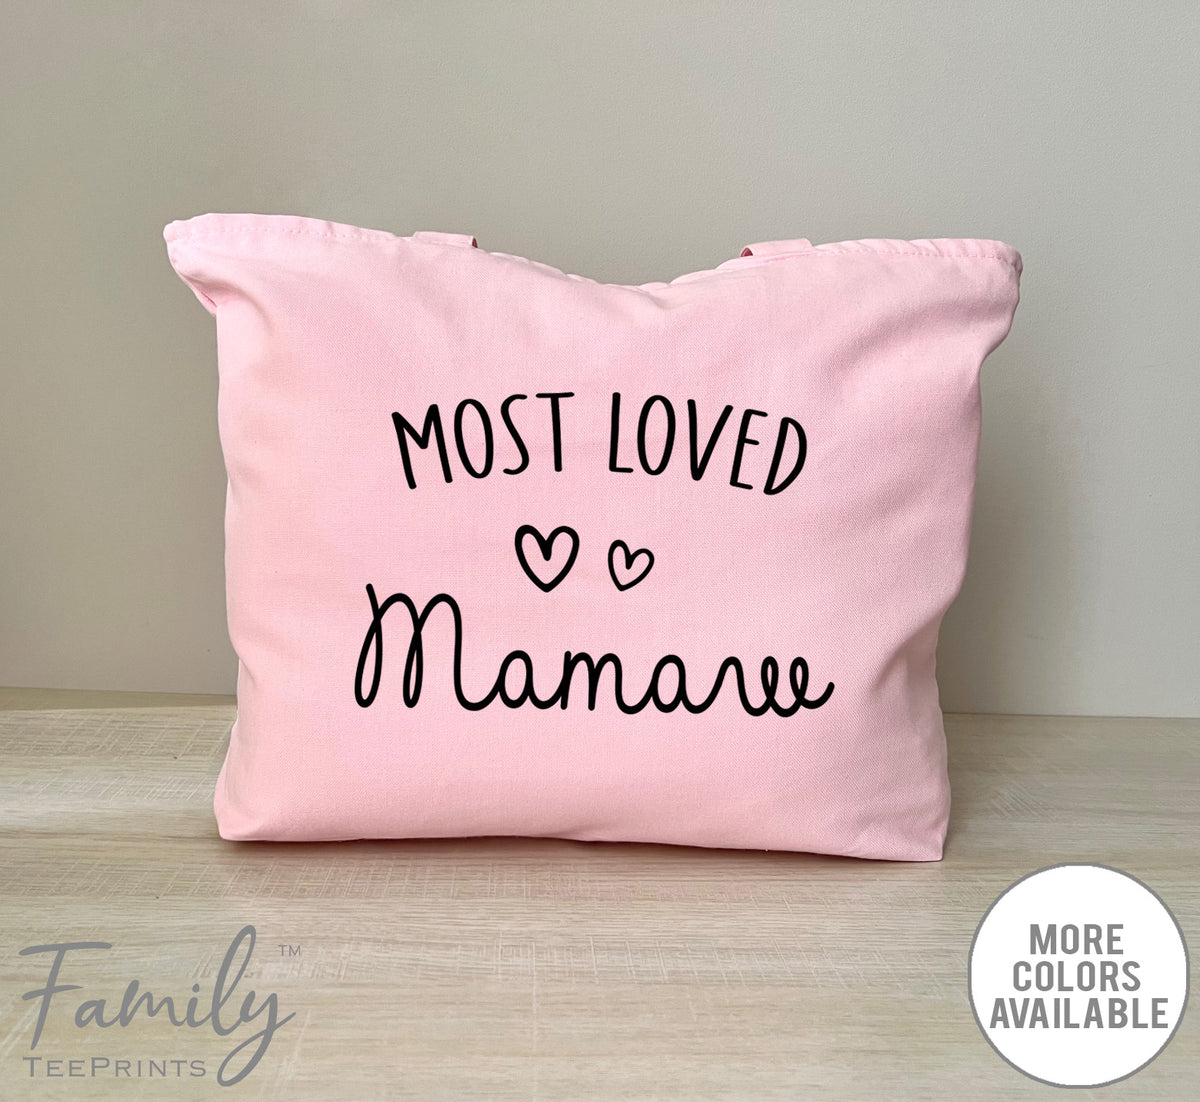 Most Loved Mamaw - Zippered Tote Bag - Mamaw Bag - Mamaw Gift - familyteeprints